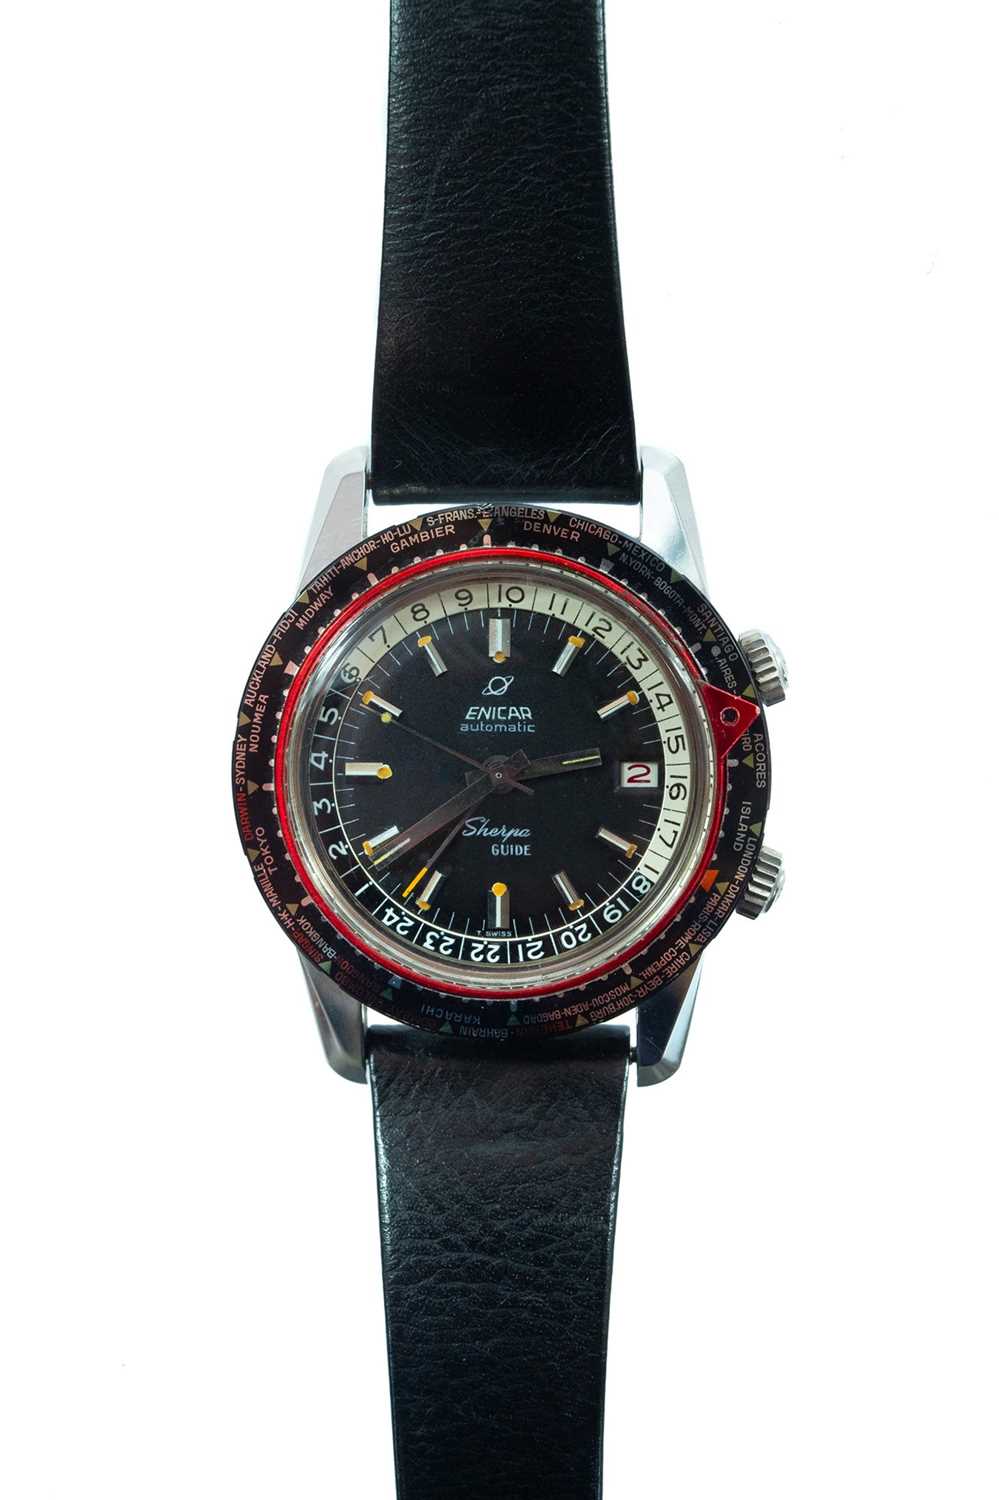 Lot 296 - Enicar Sherpa Guide 600 GMT gentleman's Pilot's wristwatch.